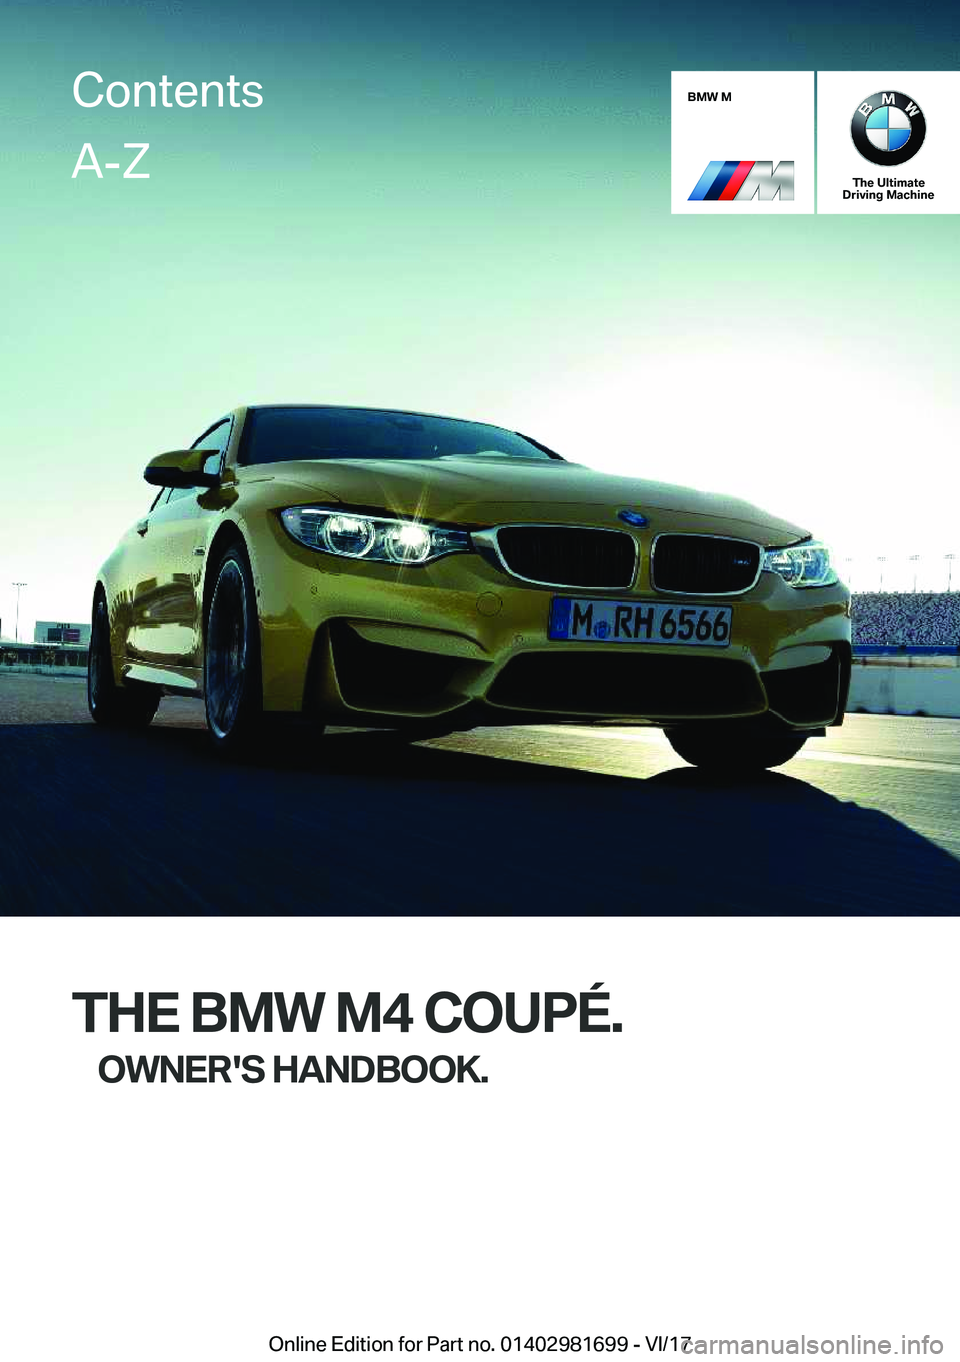 BMW M4 2018  Owners Manual �B�M�W��M
�T�h�e��U�l�t�i�m�a�t�e
�D�r�i�v�i�n�g��M�a�c�h�i�n�e
�T�H�E��B�M�W��M�4��C�O�U�P�